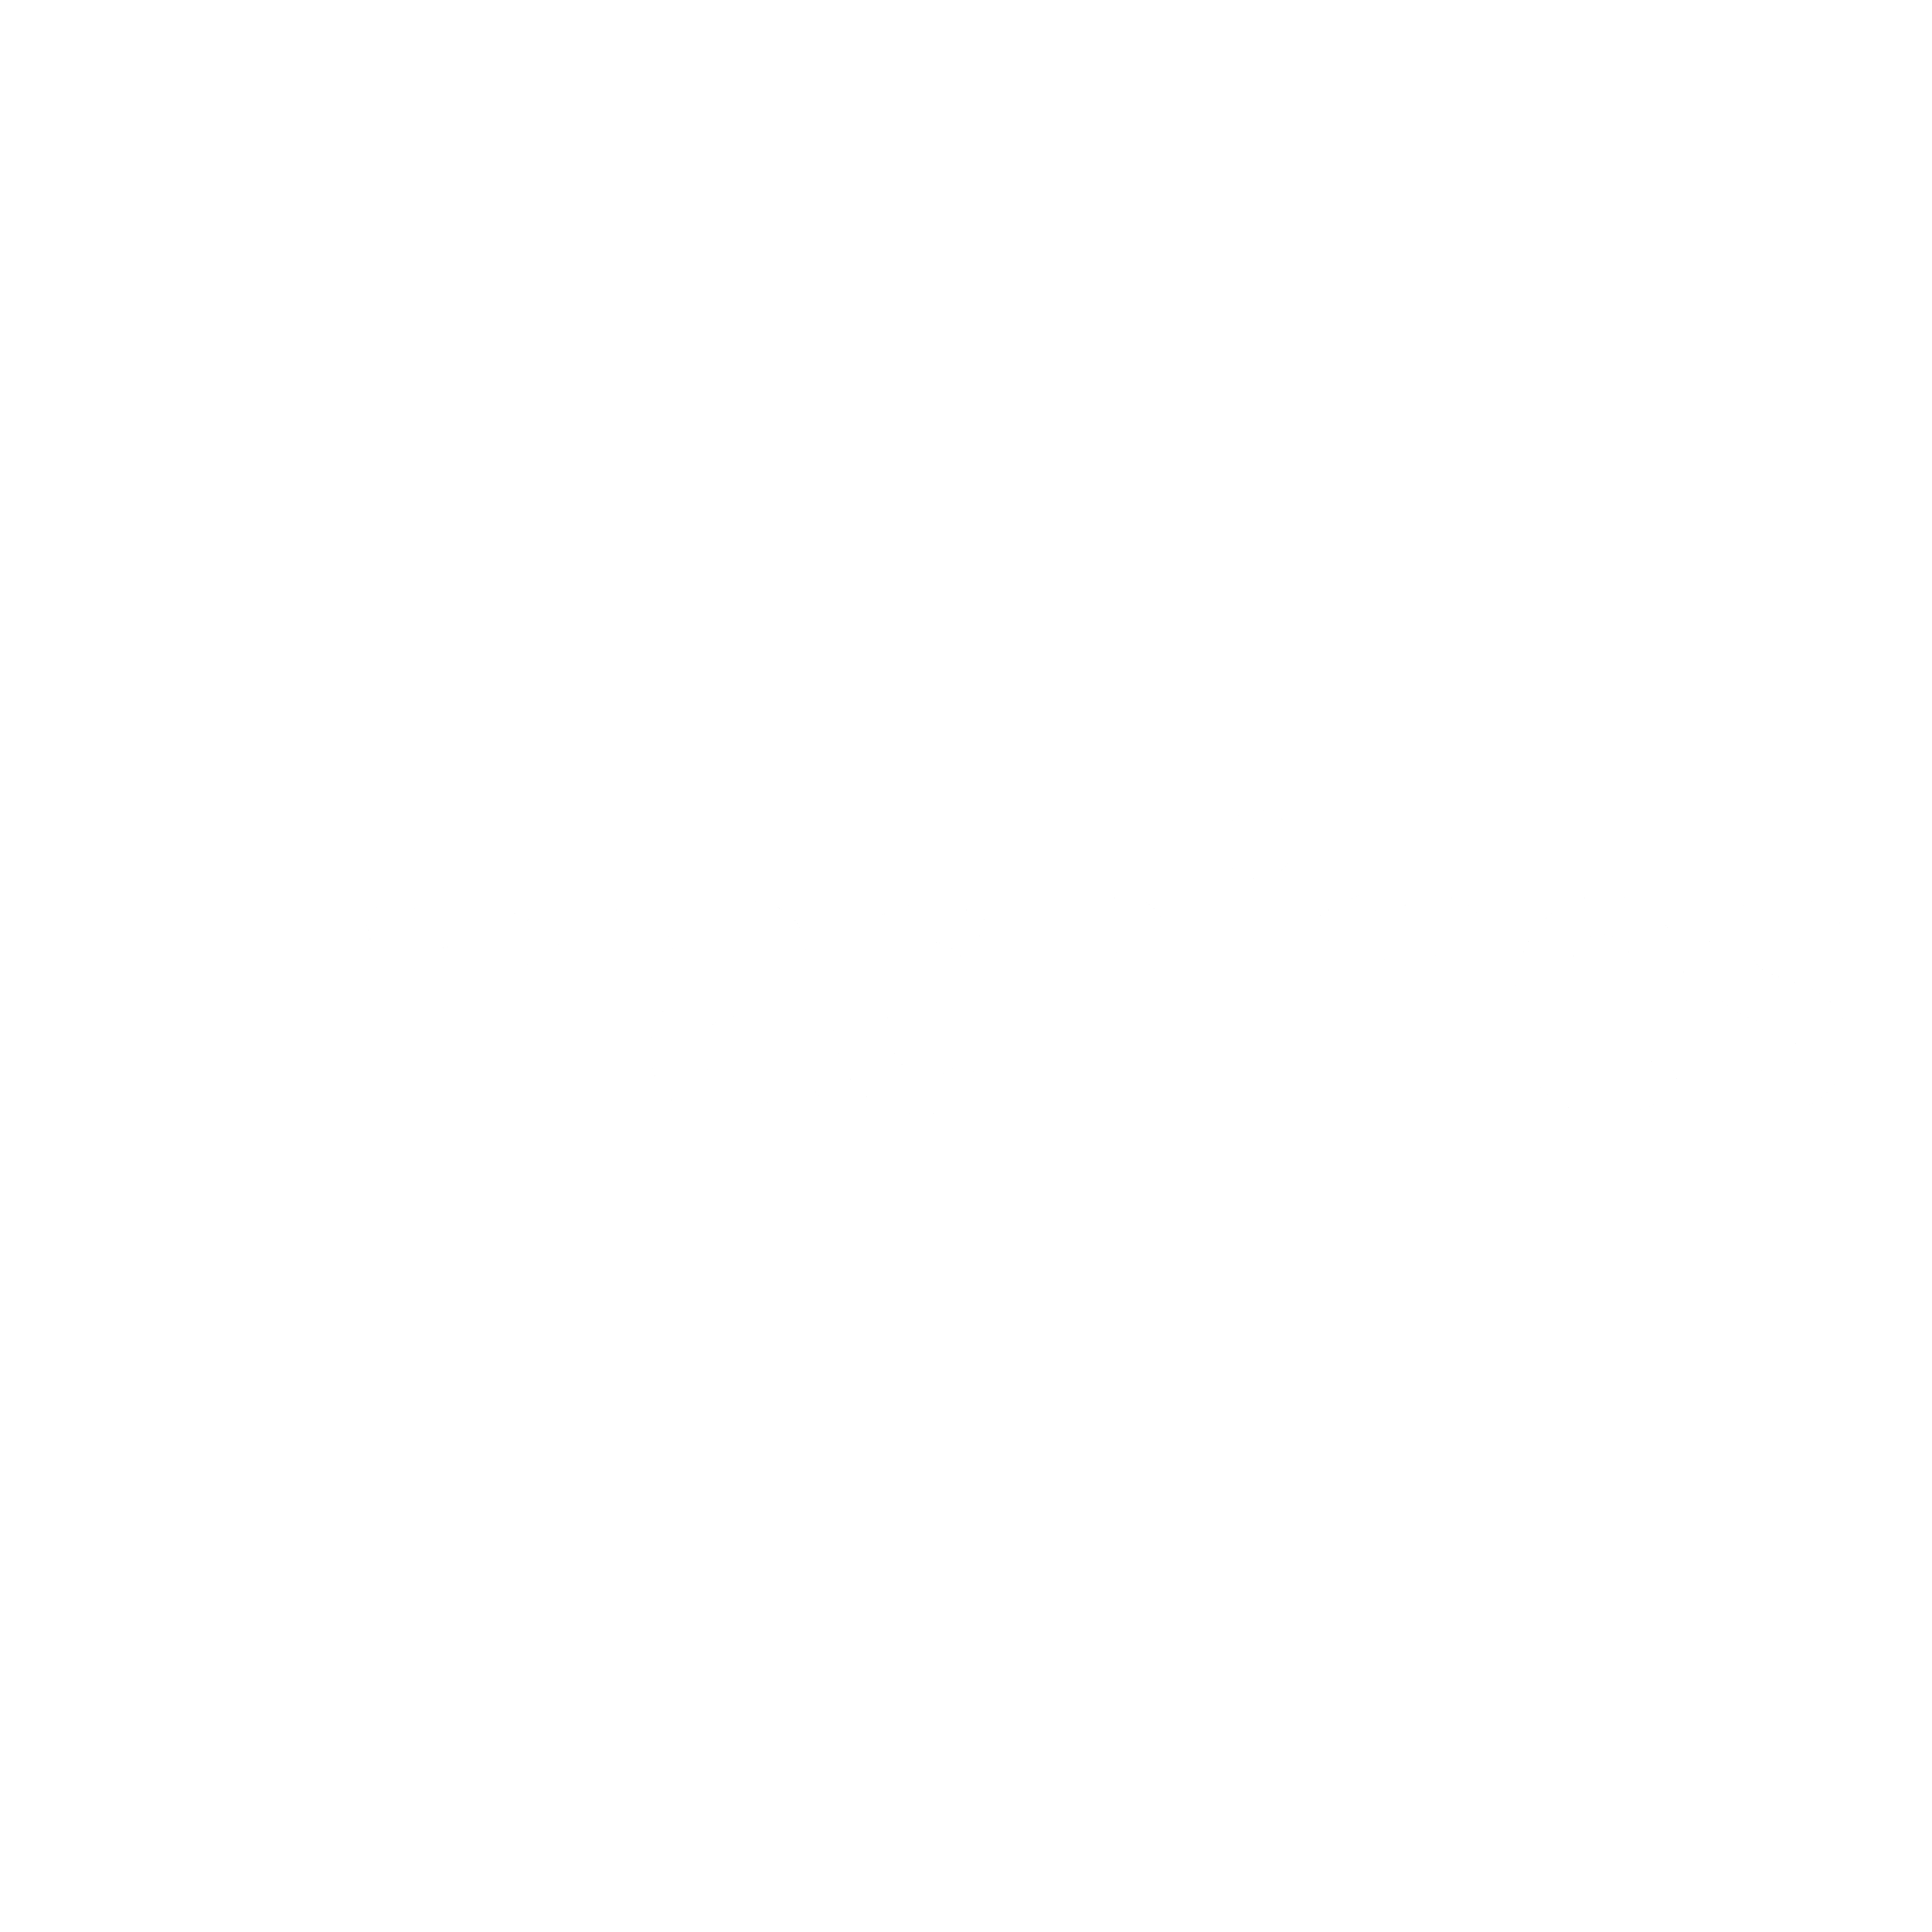 eMachines Logo - eMachines Logo PNG Transparent & SVG Vector - Freebie Supply